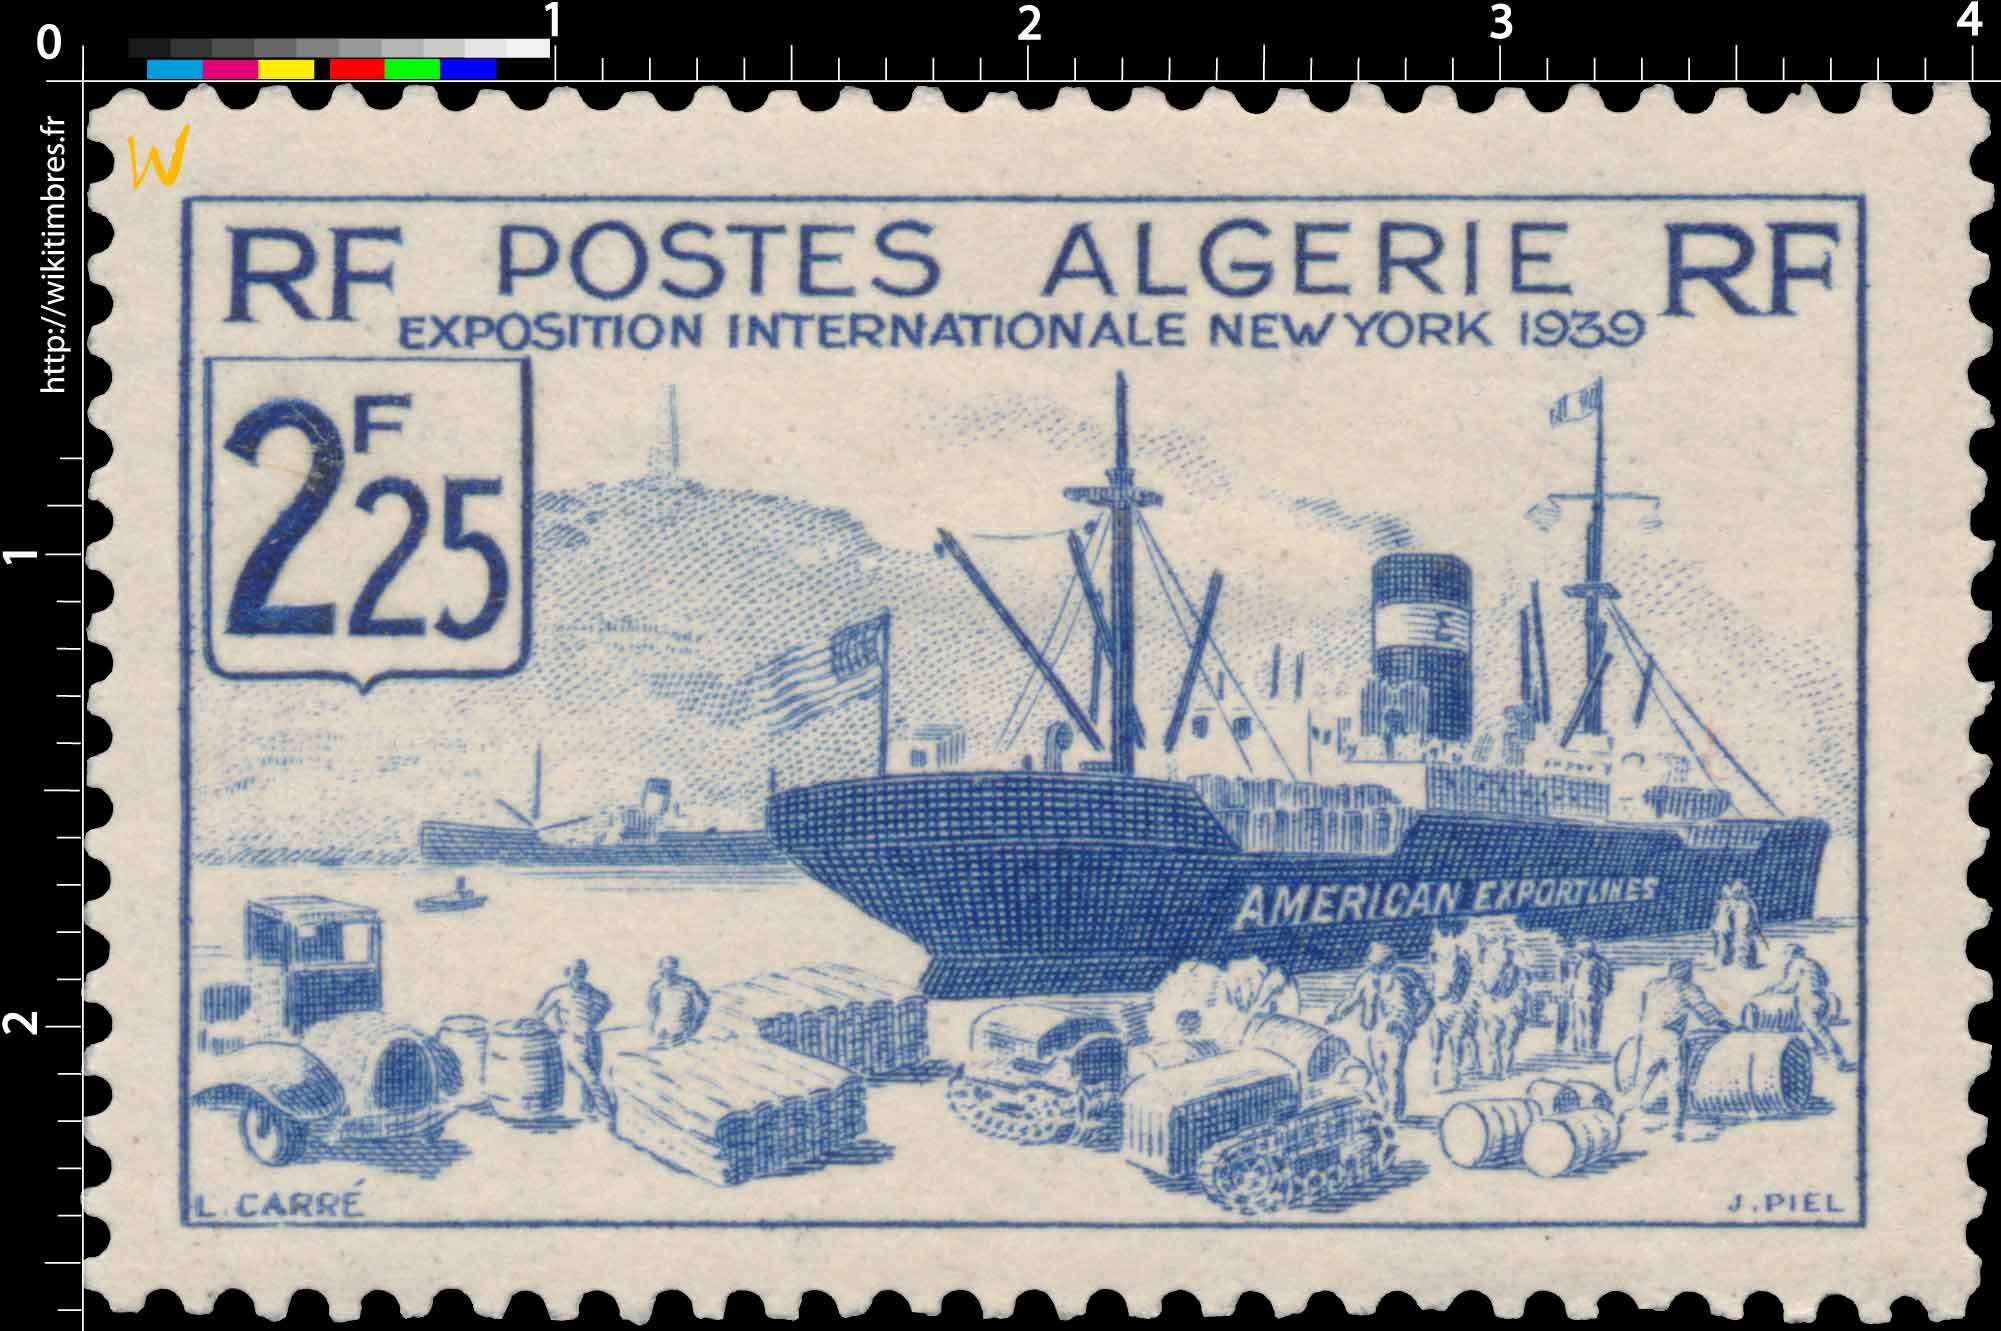 Algérie - Exposition internationale New-York 1939